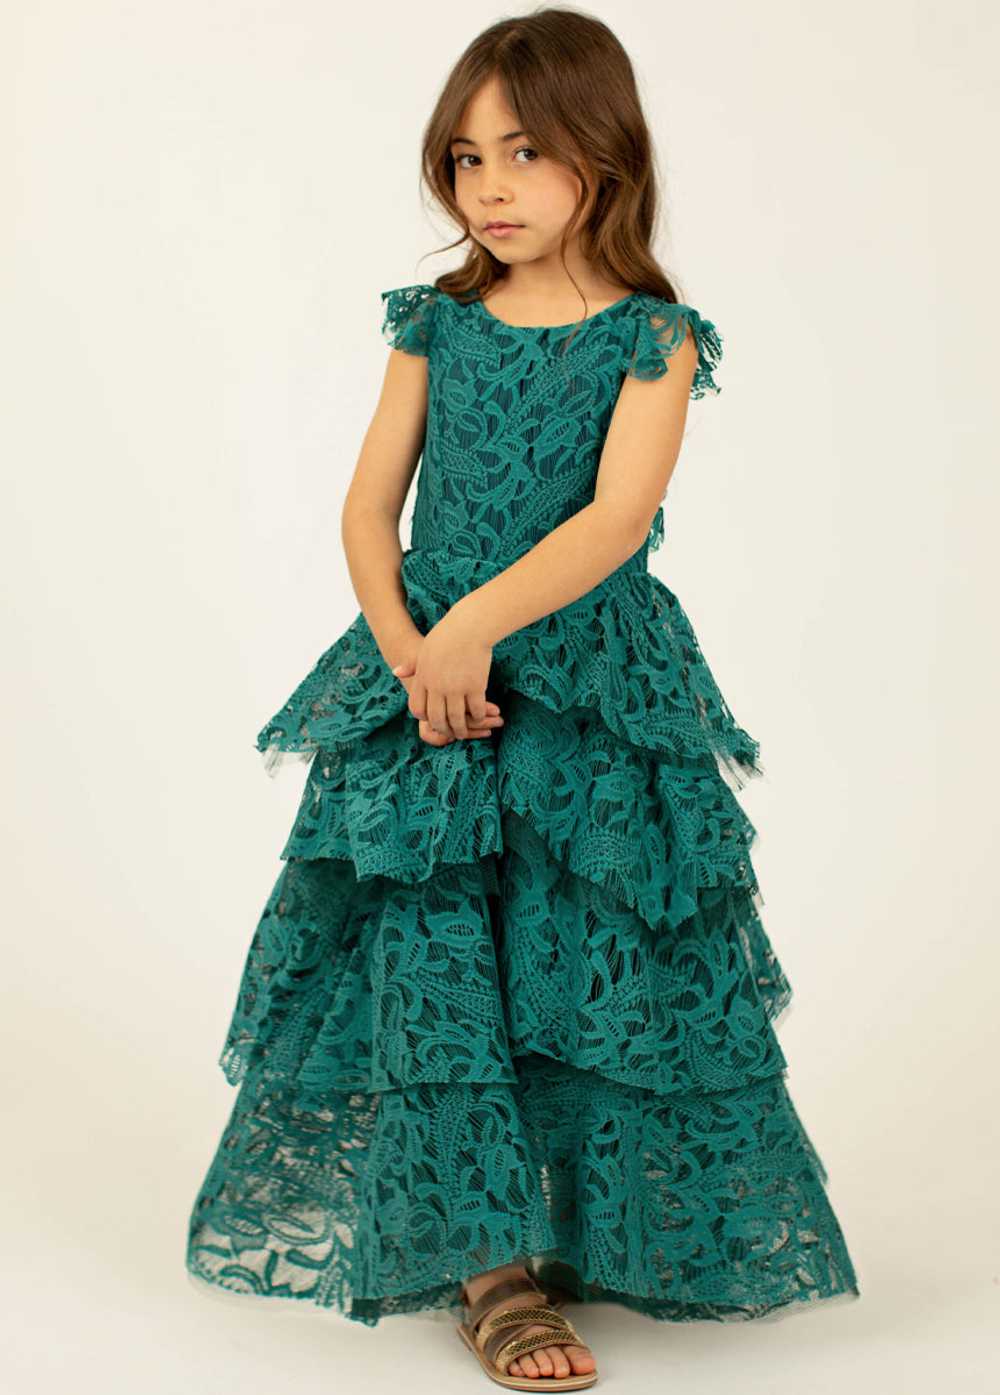 Joyfolie Azalea Dress in Teal - image 5